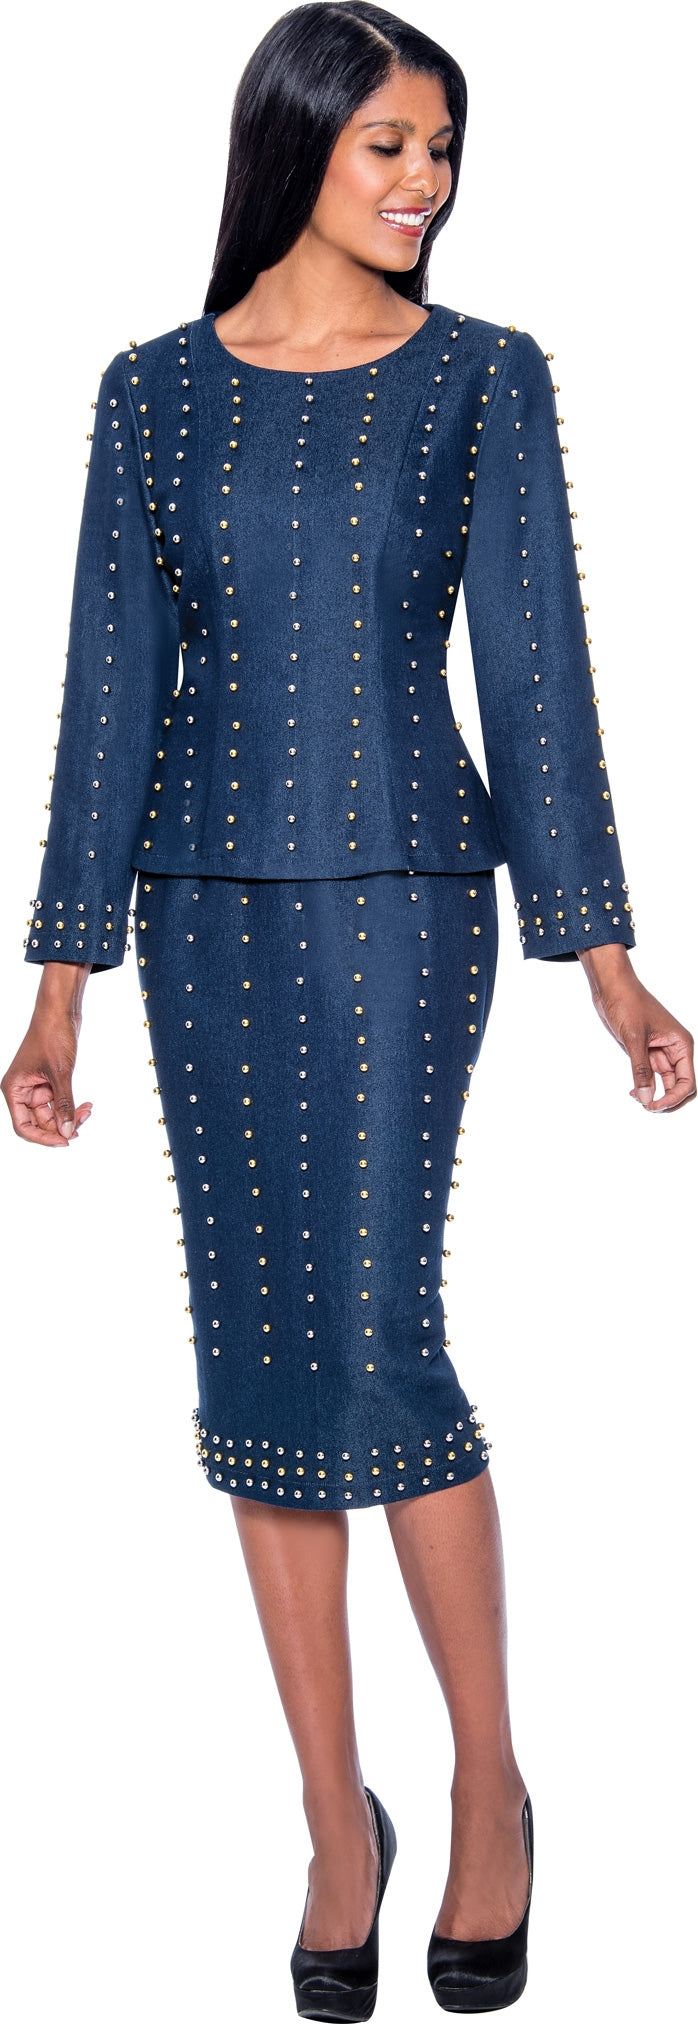 Devine Sport Denim Skirt Suit 63672-Navy - Church Suits For Less